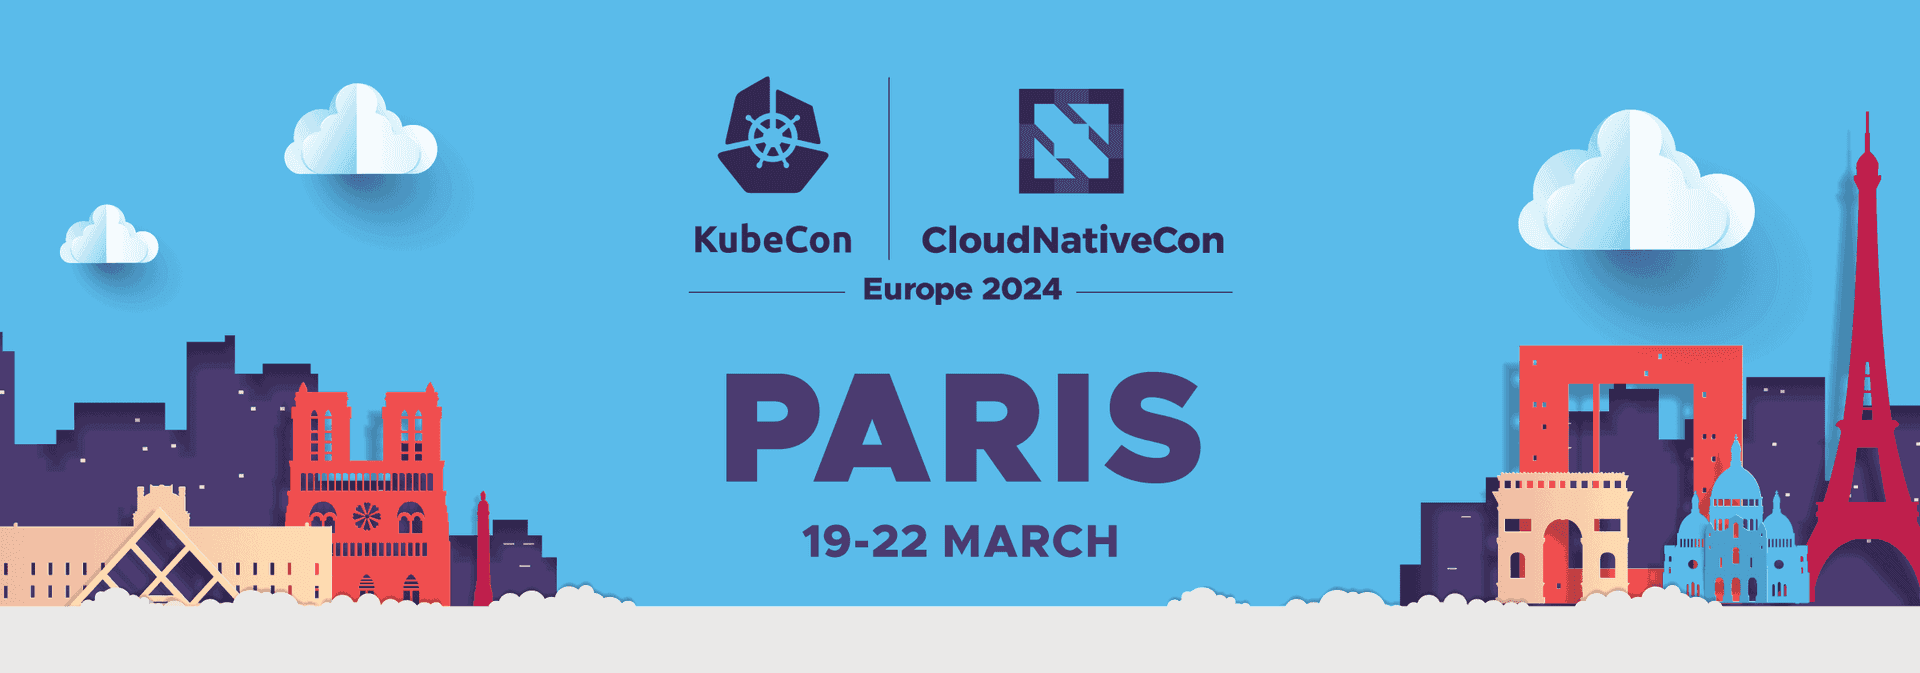 KubeCon + CloudNativeCon EU Paris, France 2024